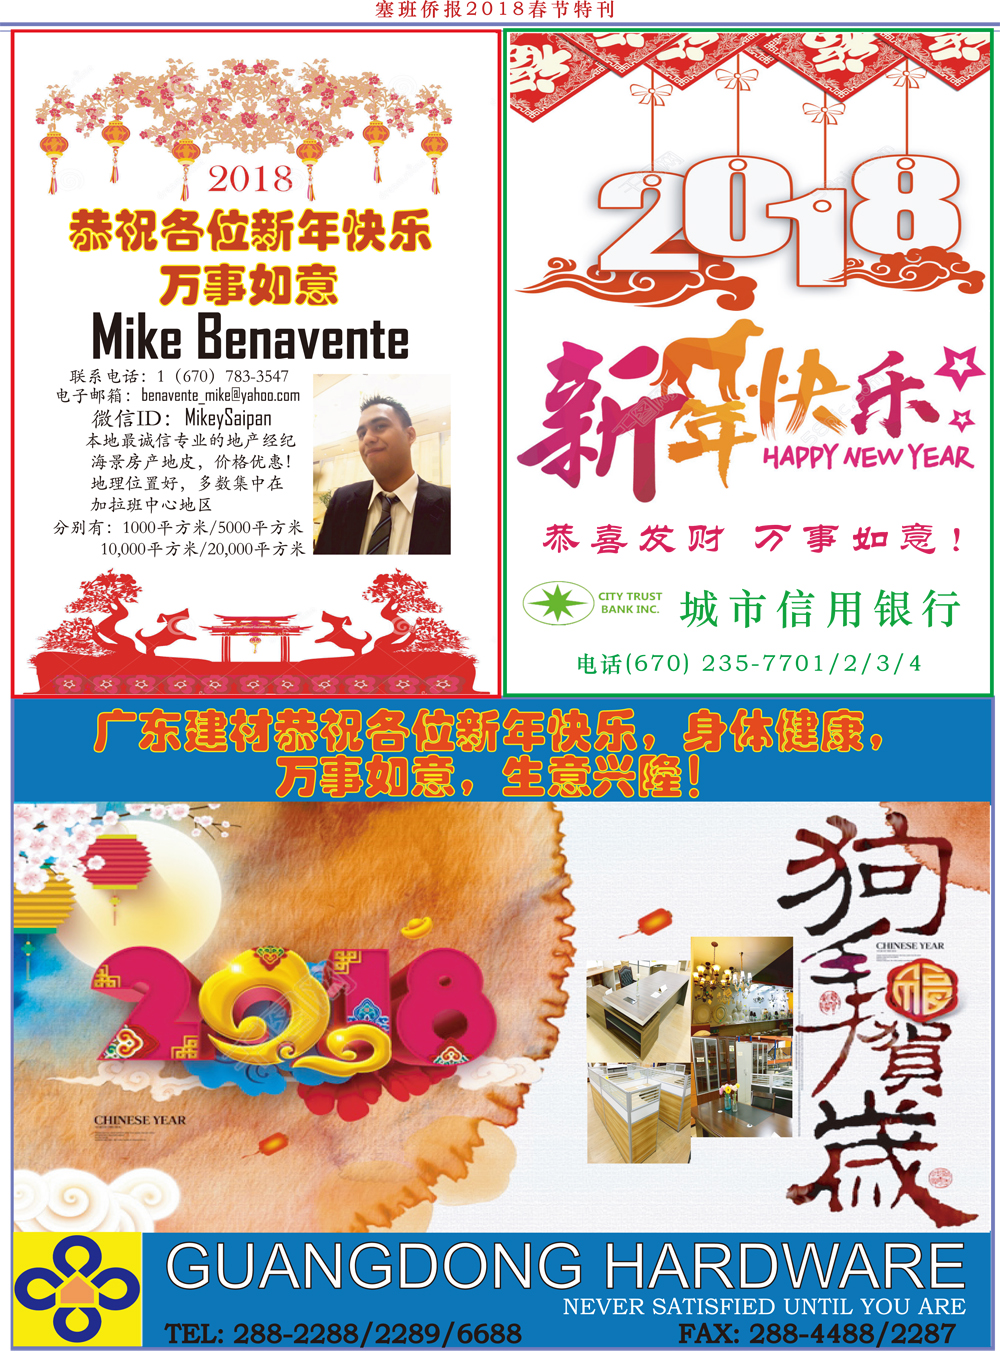 PAGE 14 广东建材+mikeB quarter.jpg